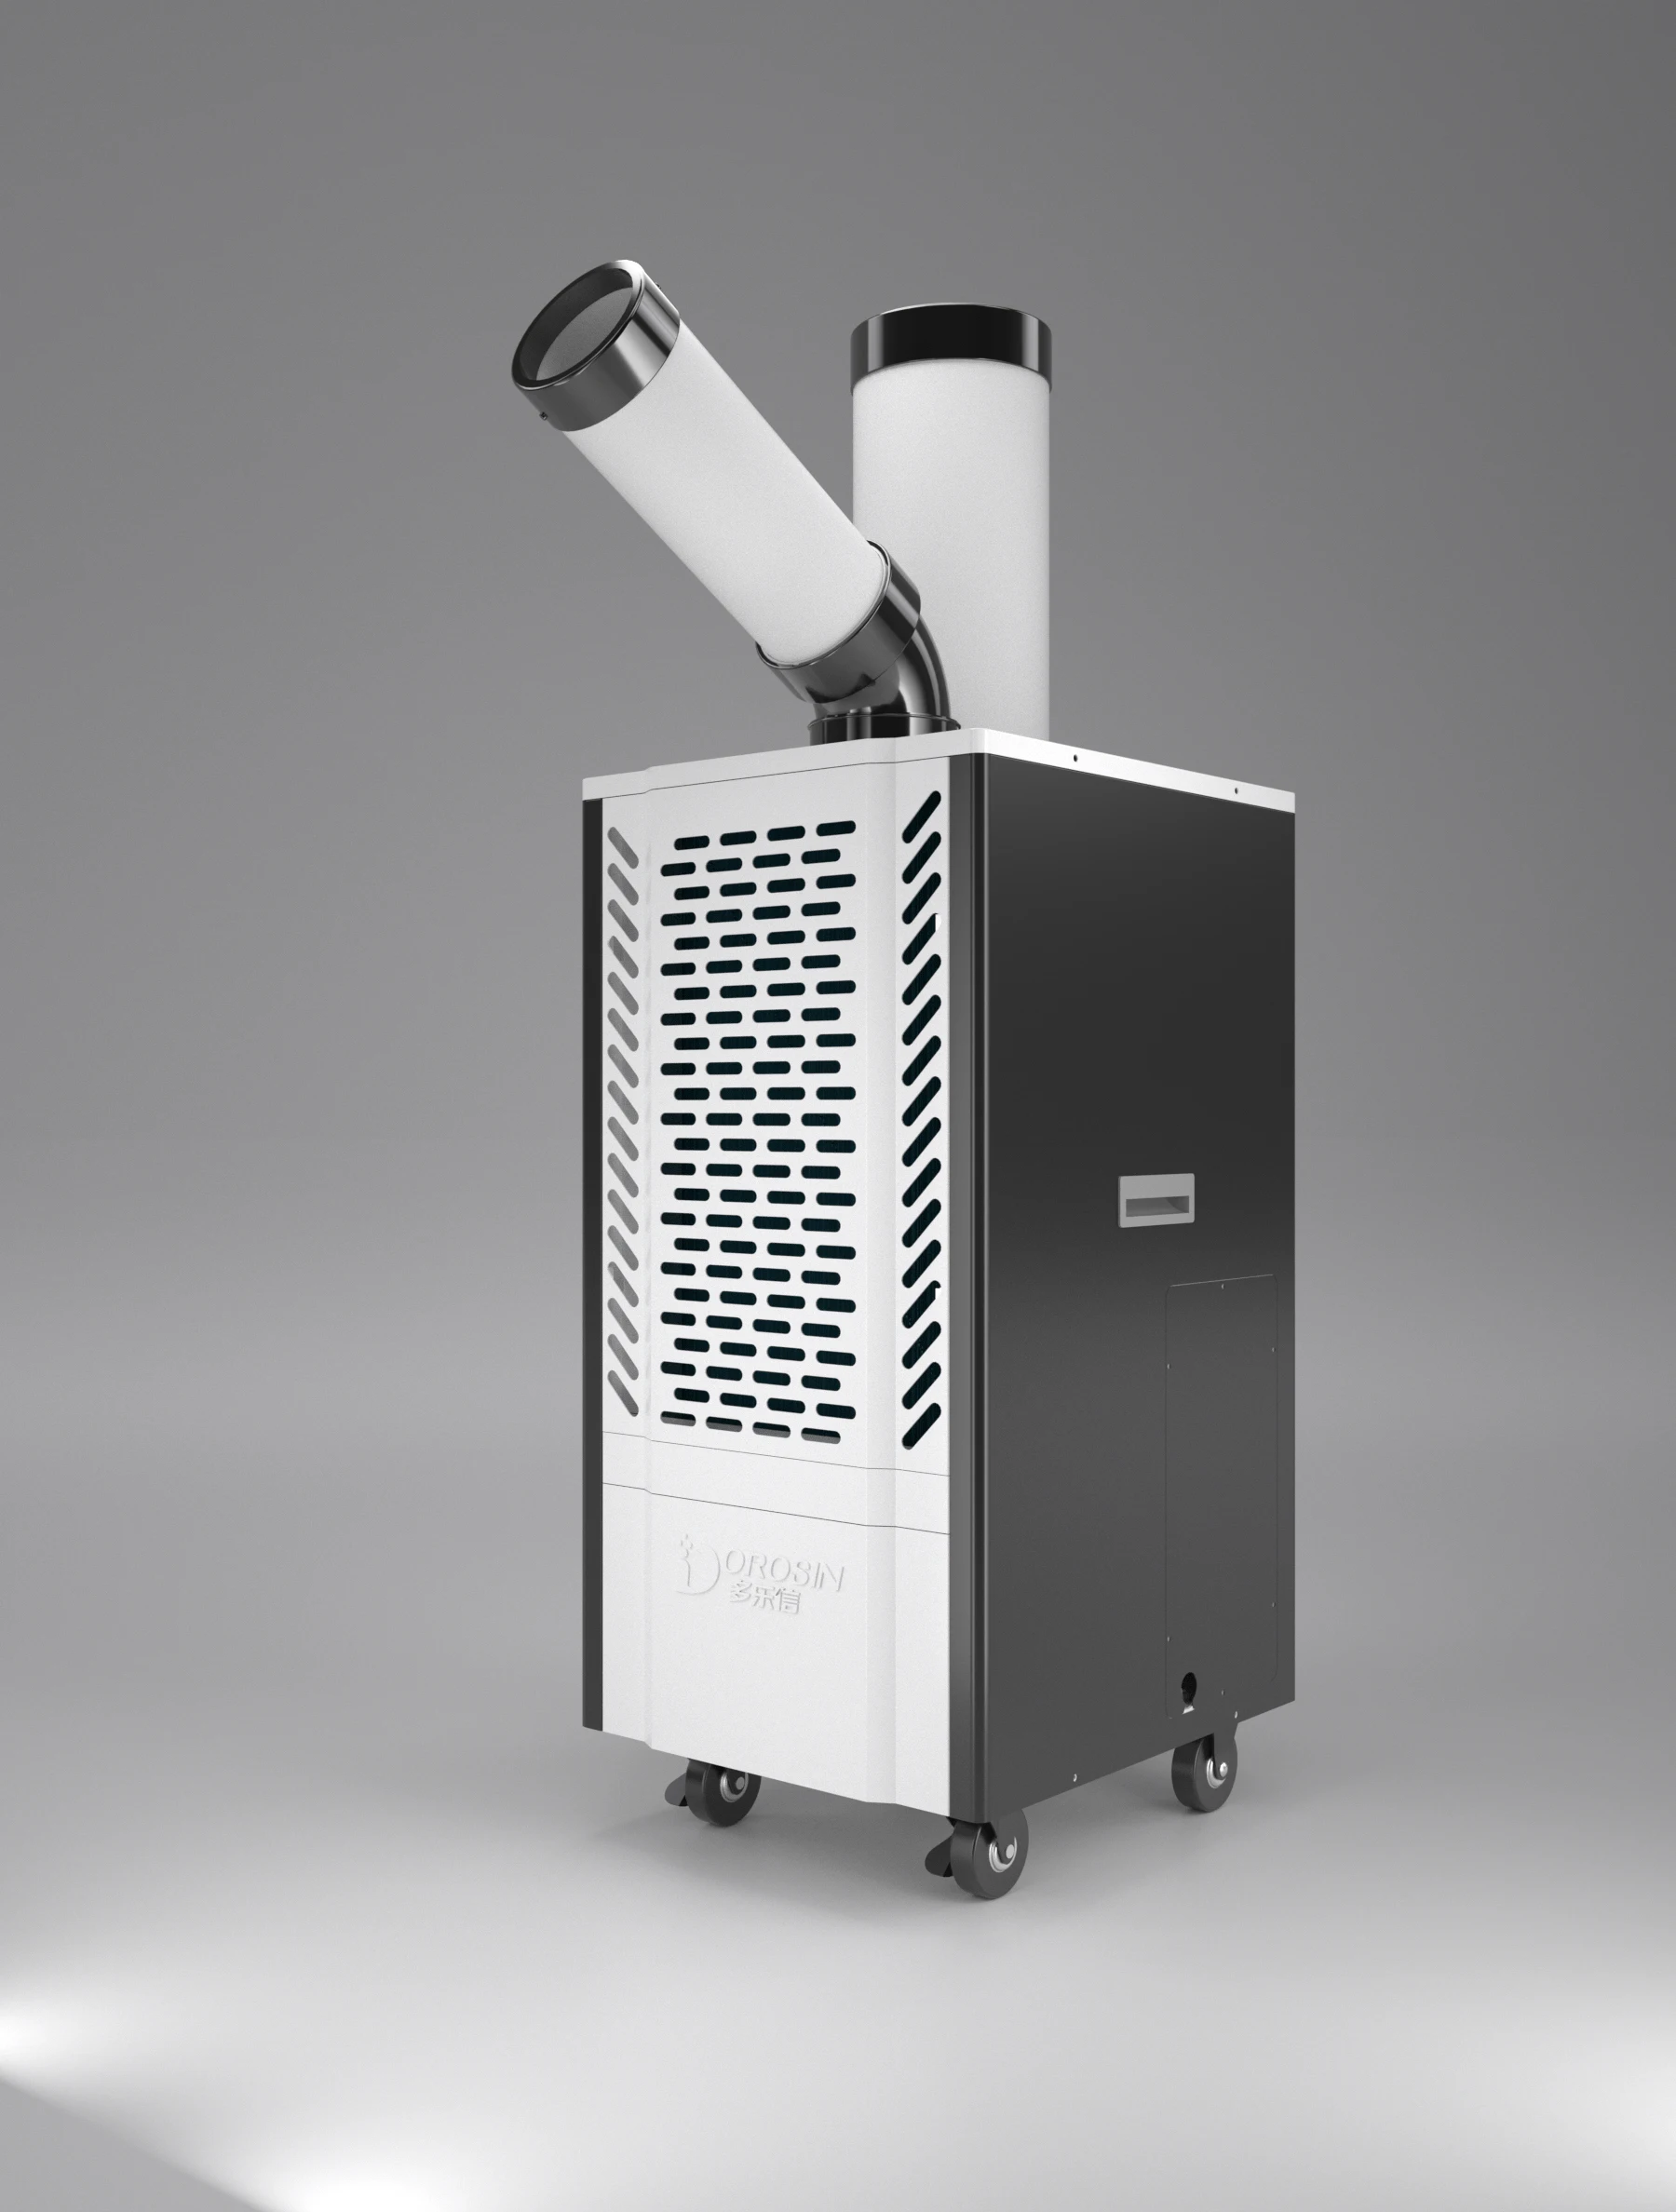 Dorosin Mini spot cooler 9000 btu industrial air conditioner manufacturer 2700W for warehouse workshop food industry